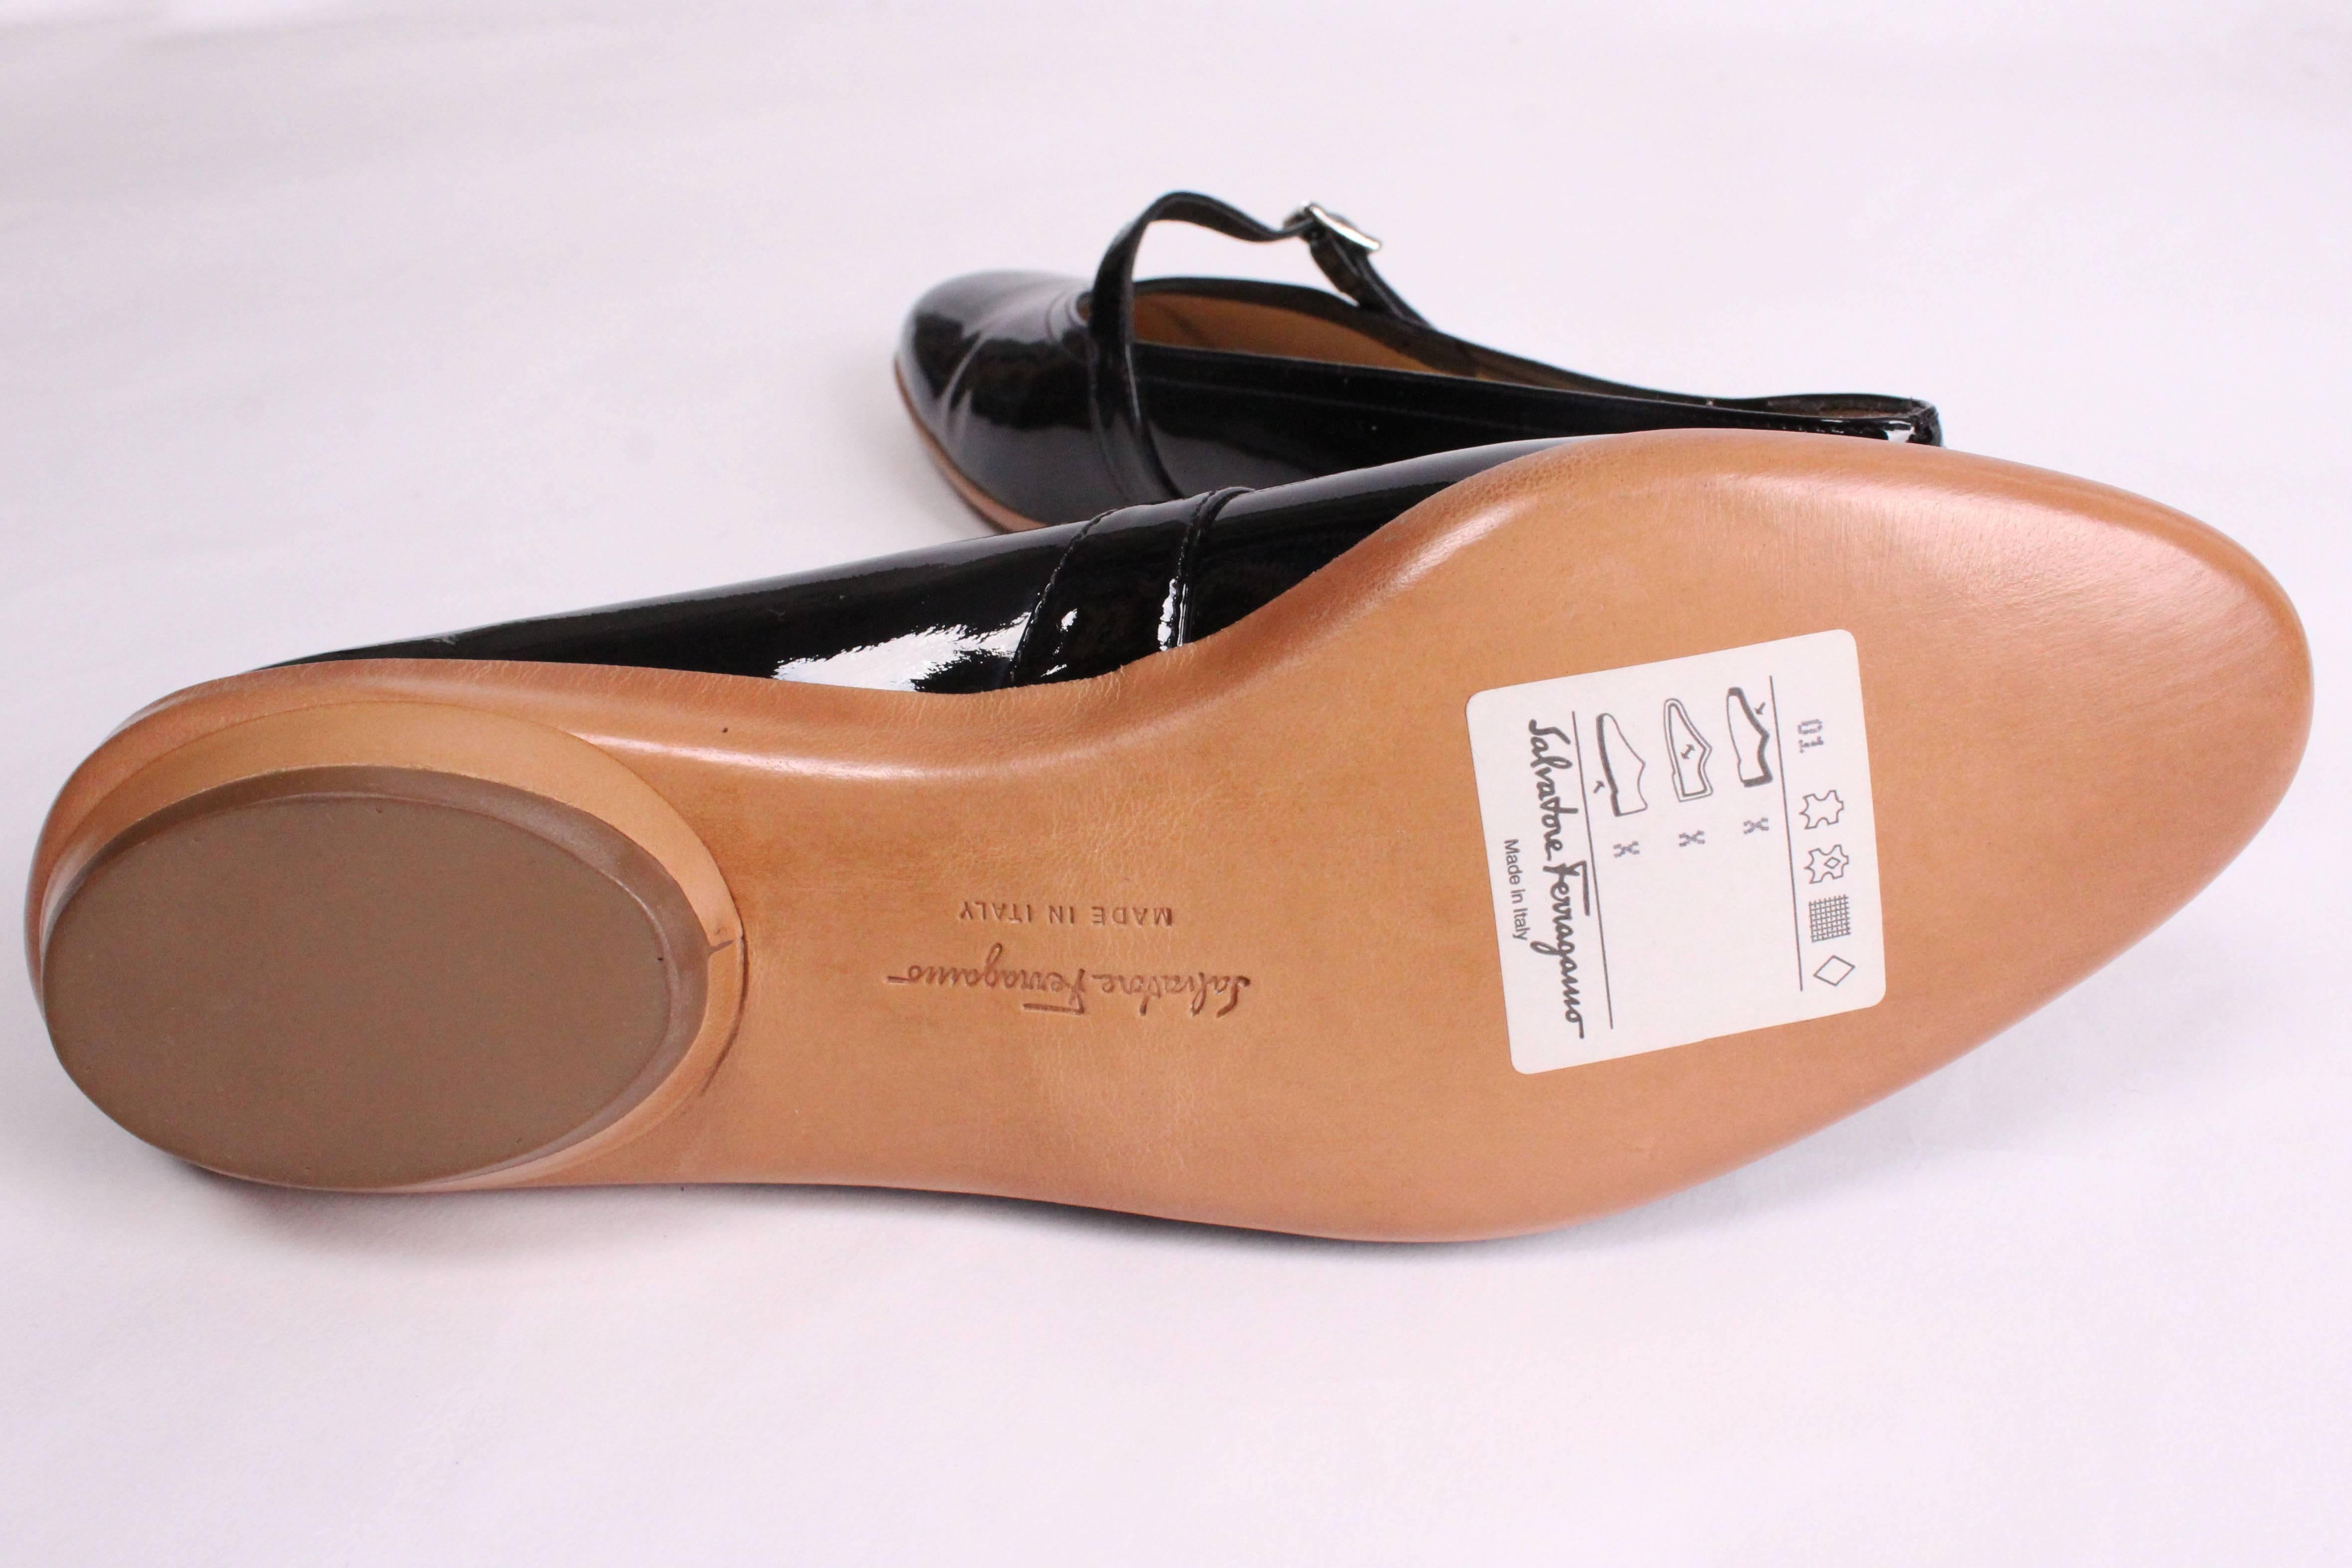 Ferragamo Audrey Shoes in Black Patent Leather 1